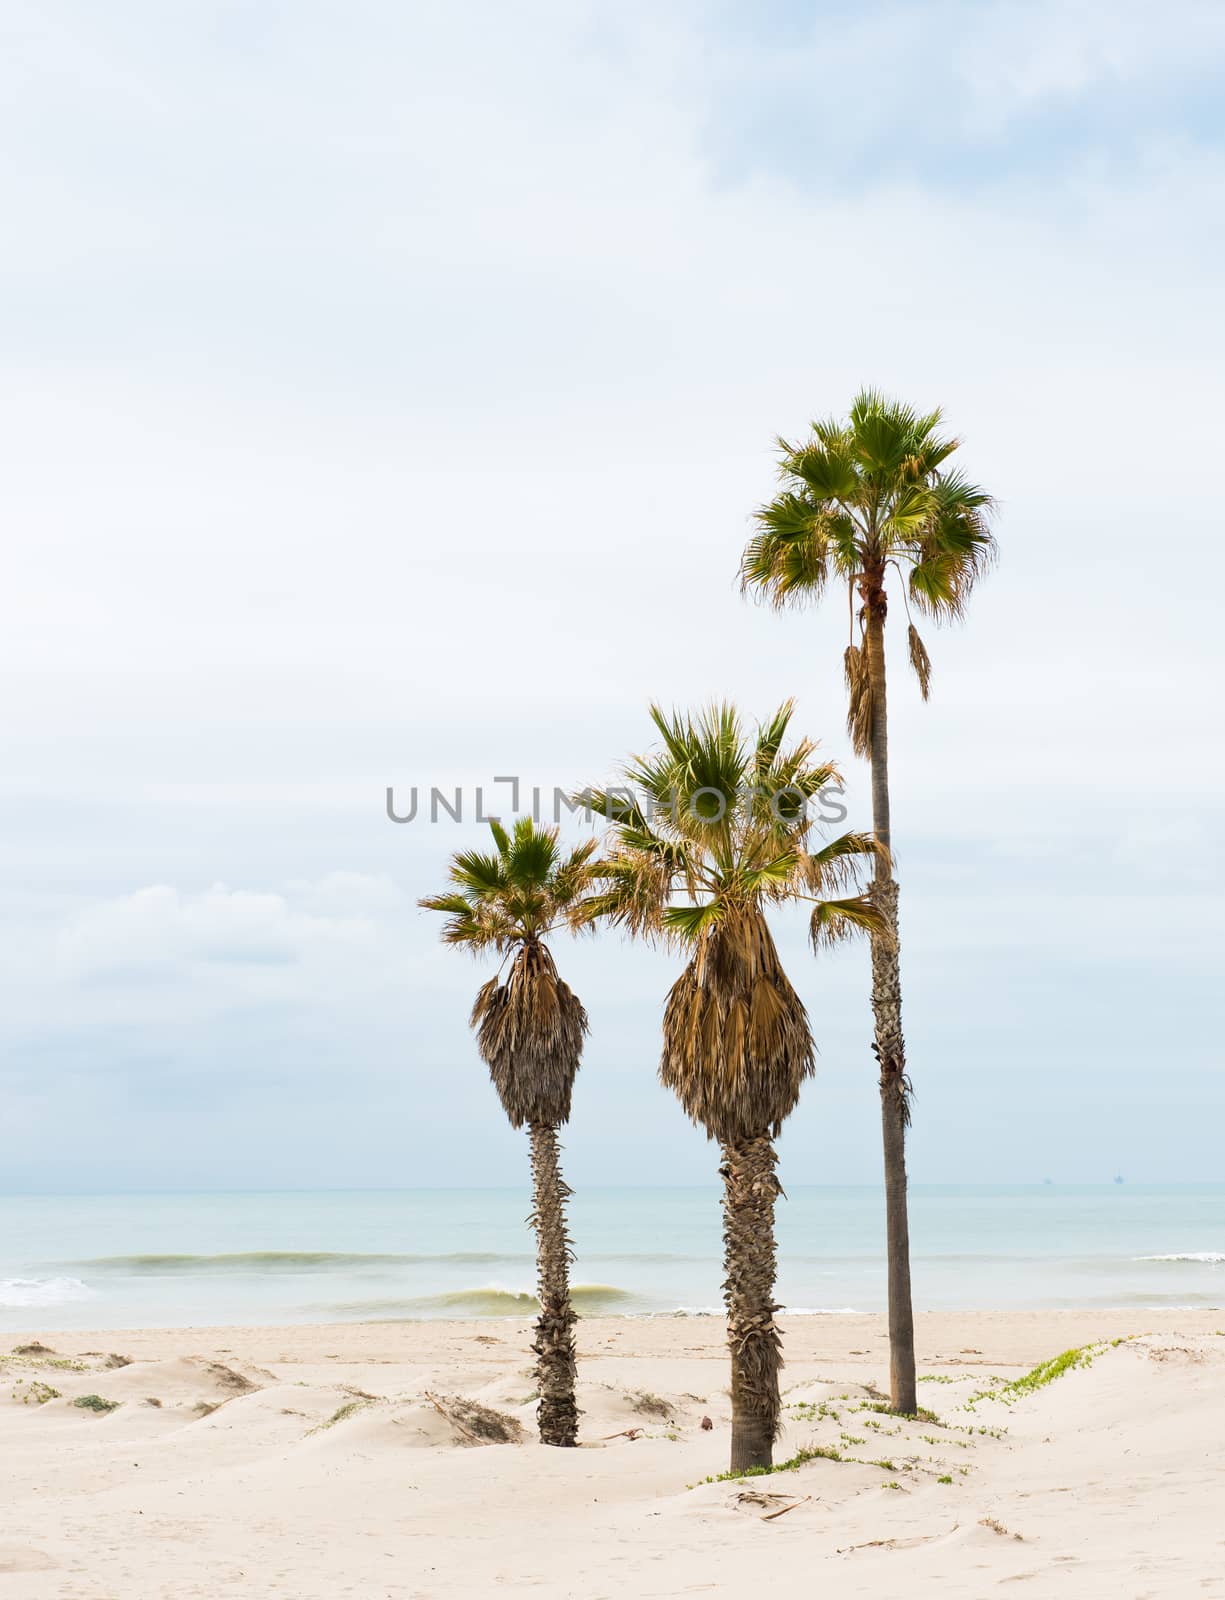 Palm trees at a beach in California, Pacific Ocean by Njean